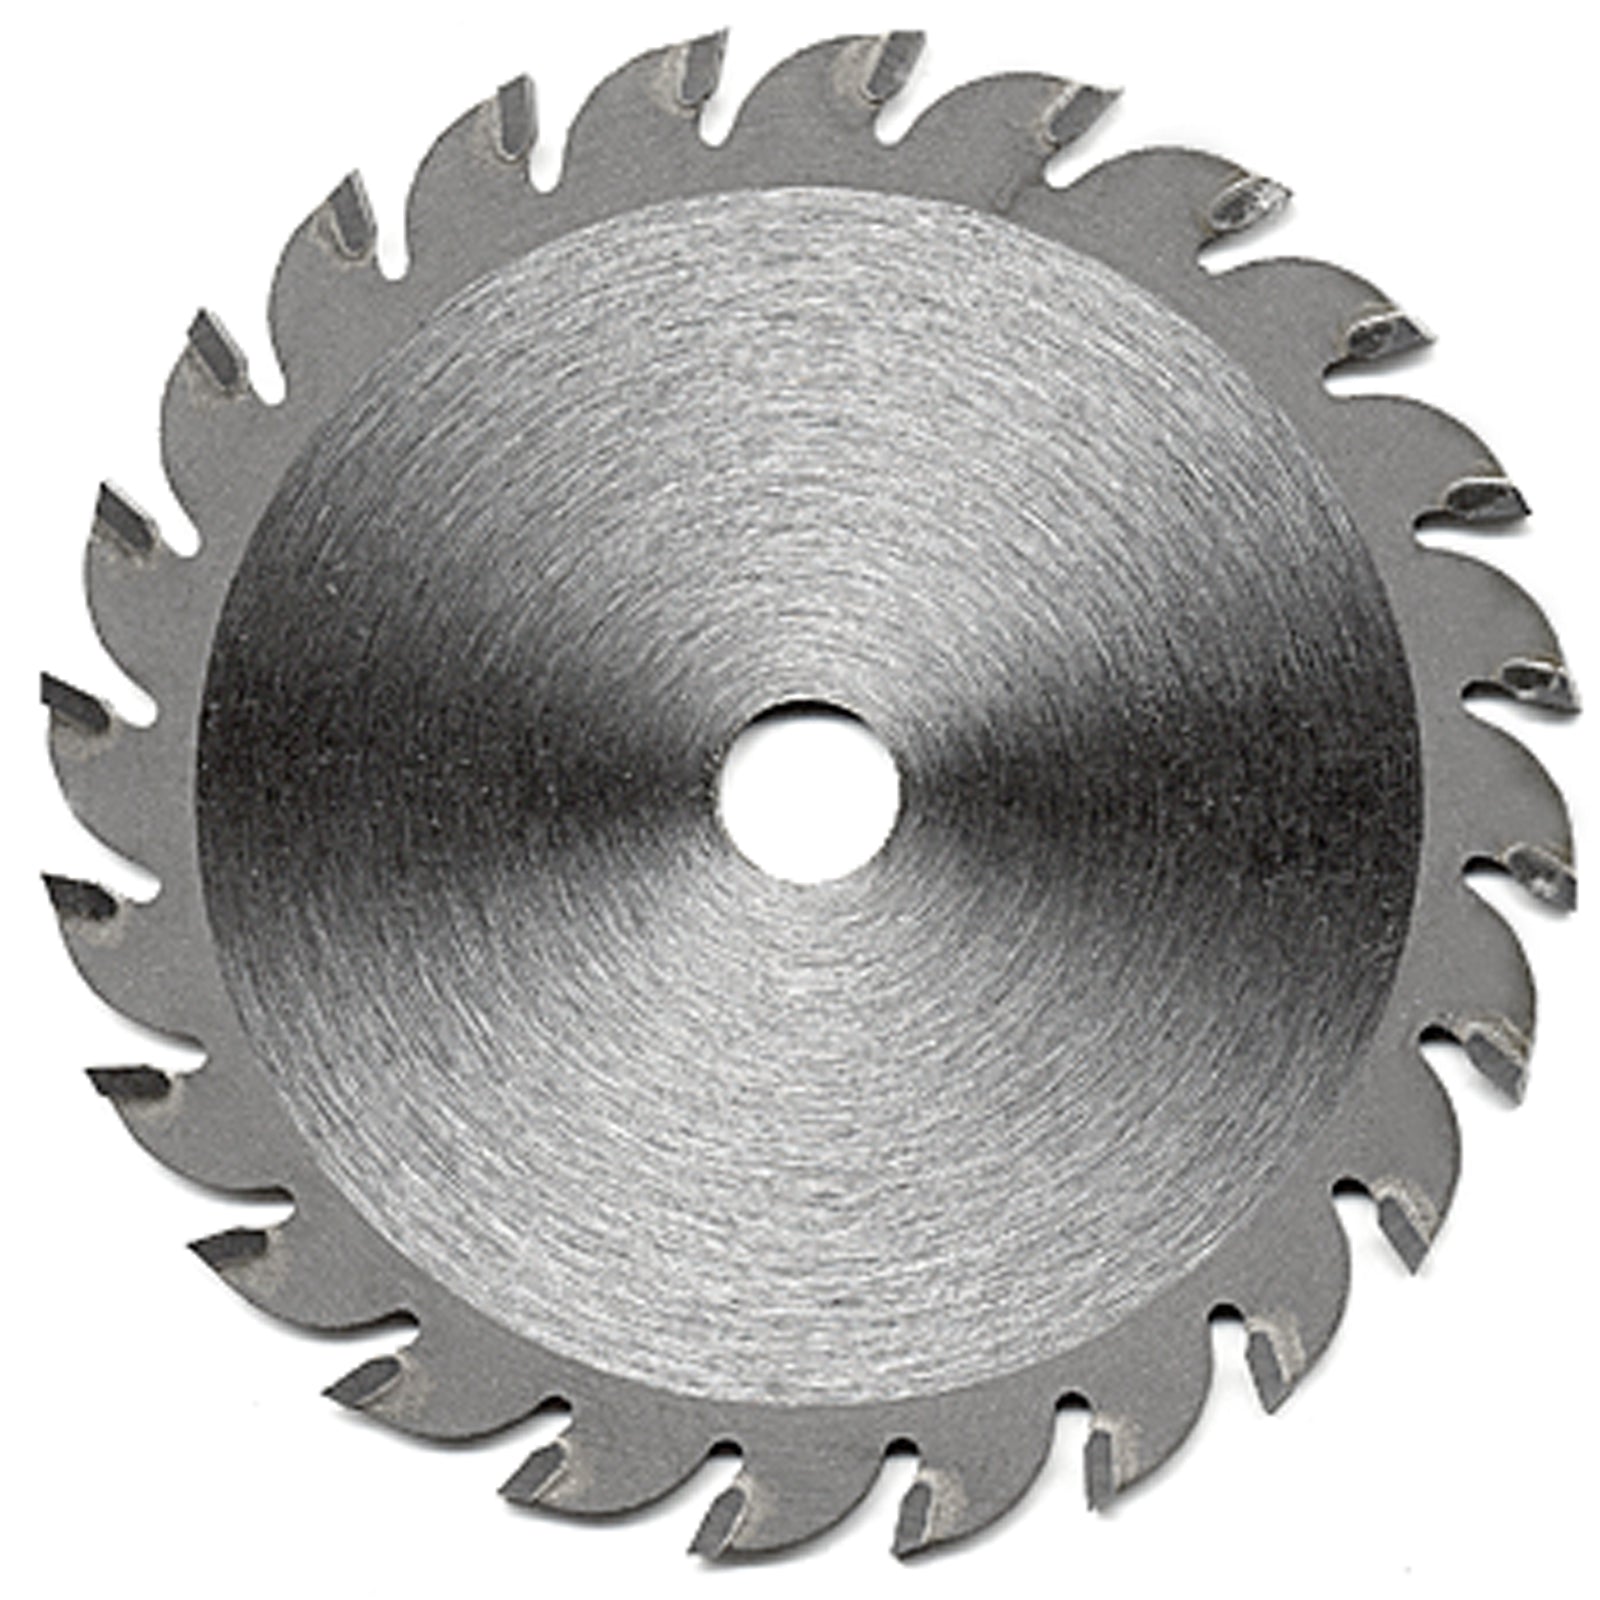 24 Tooth Carbide Tip Saw Blade (3 - 1/4 Inch Dia., 10 mm hole)